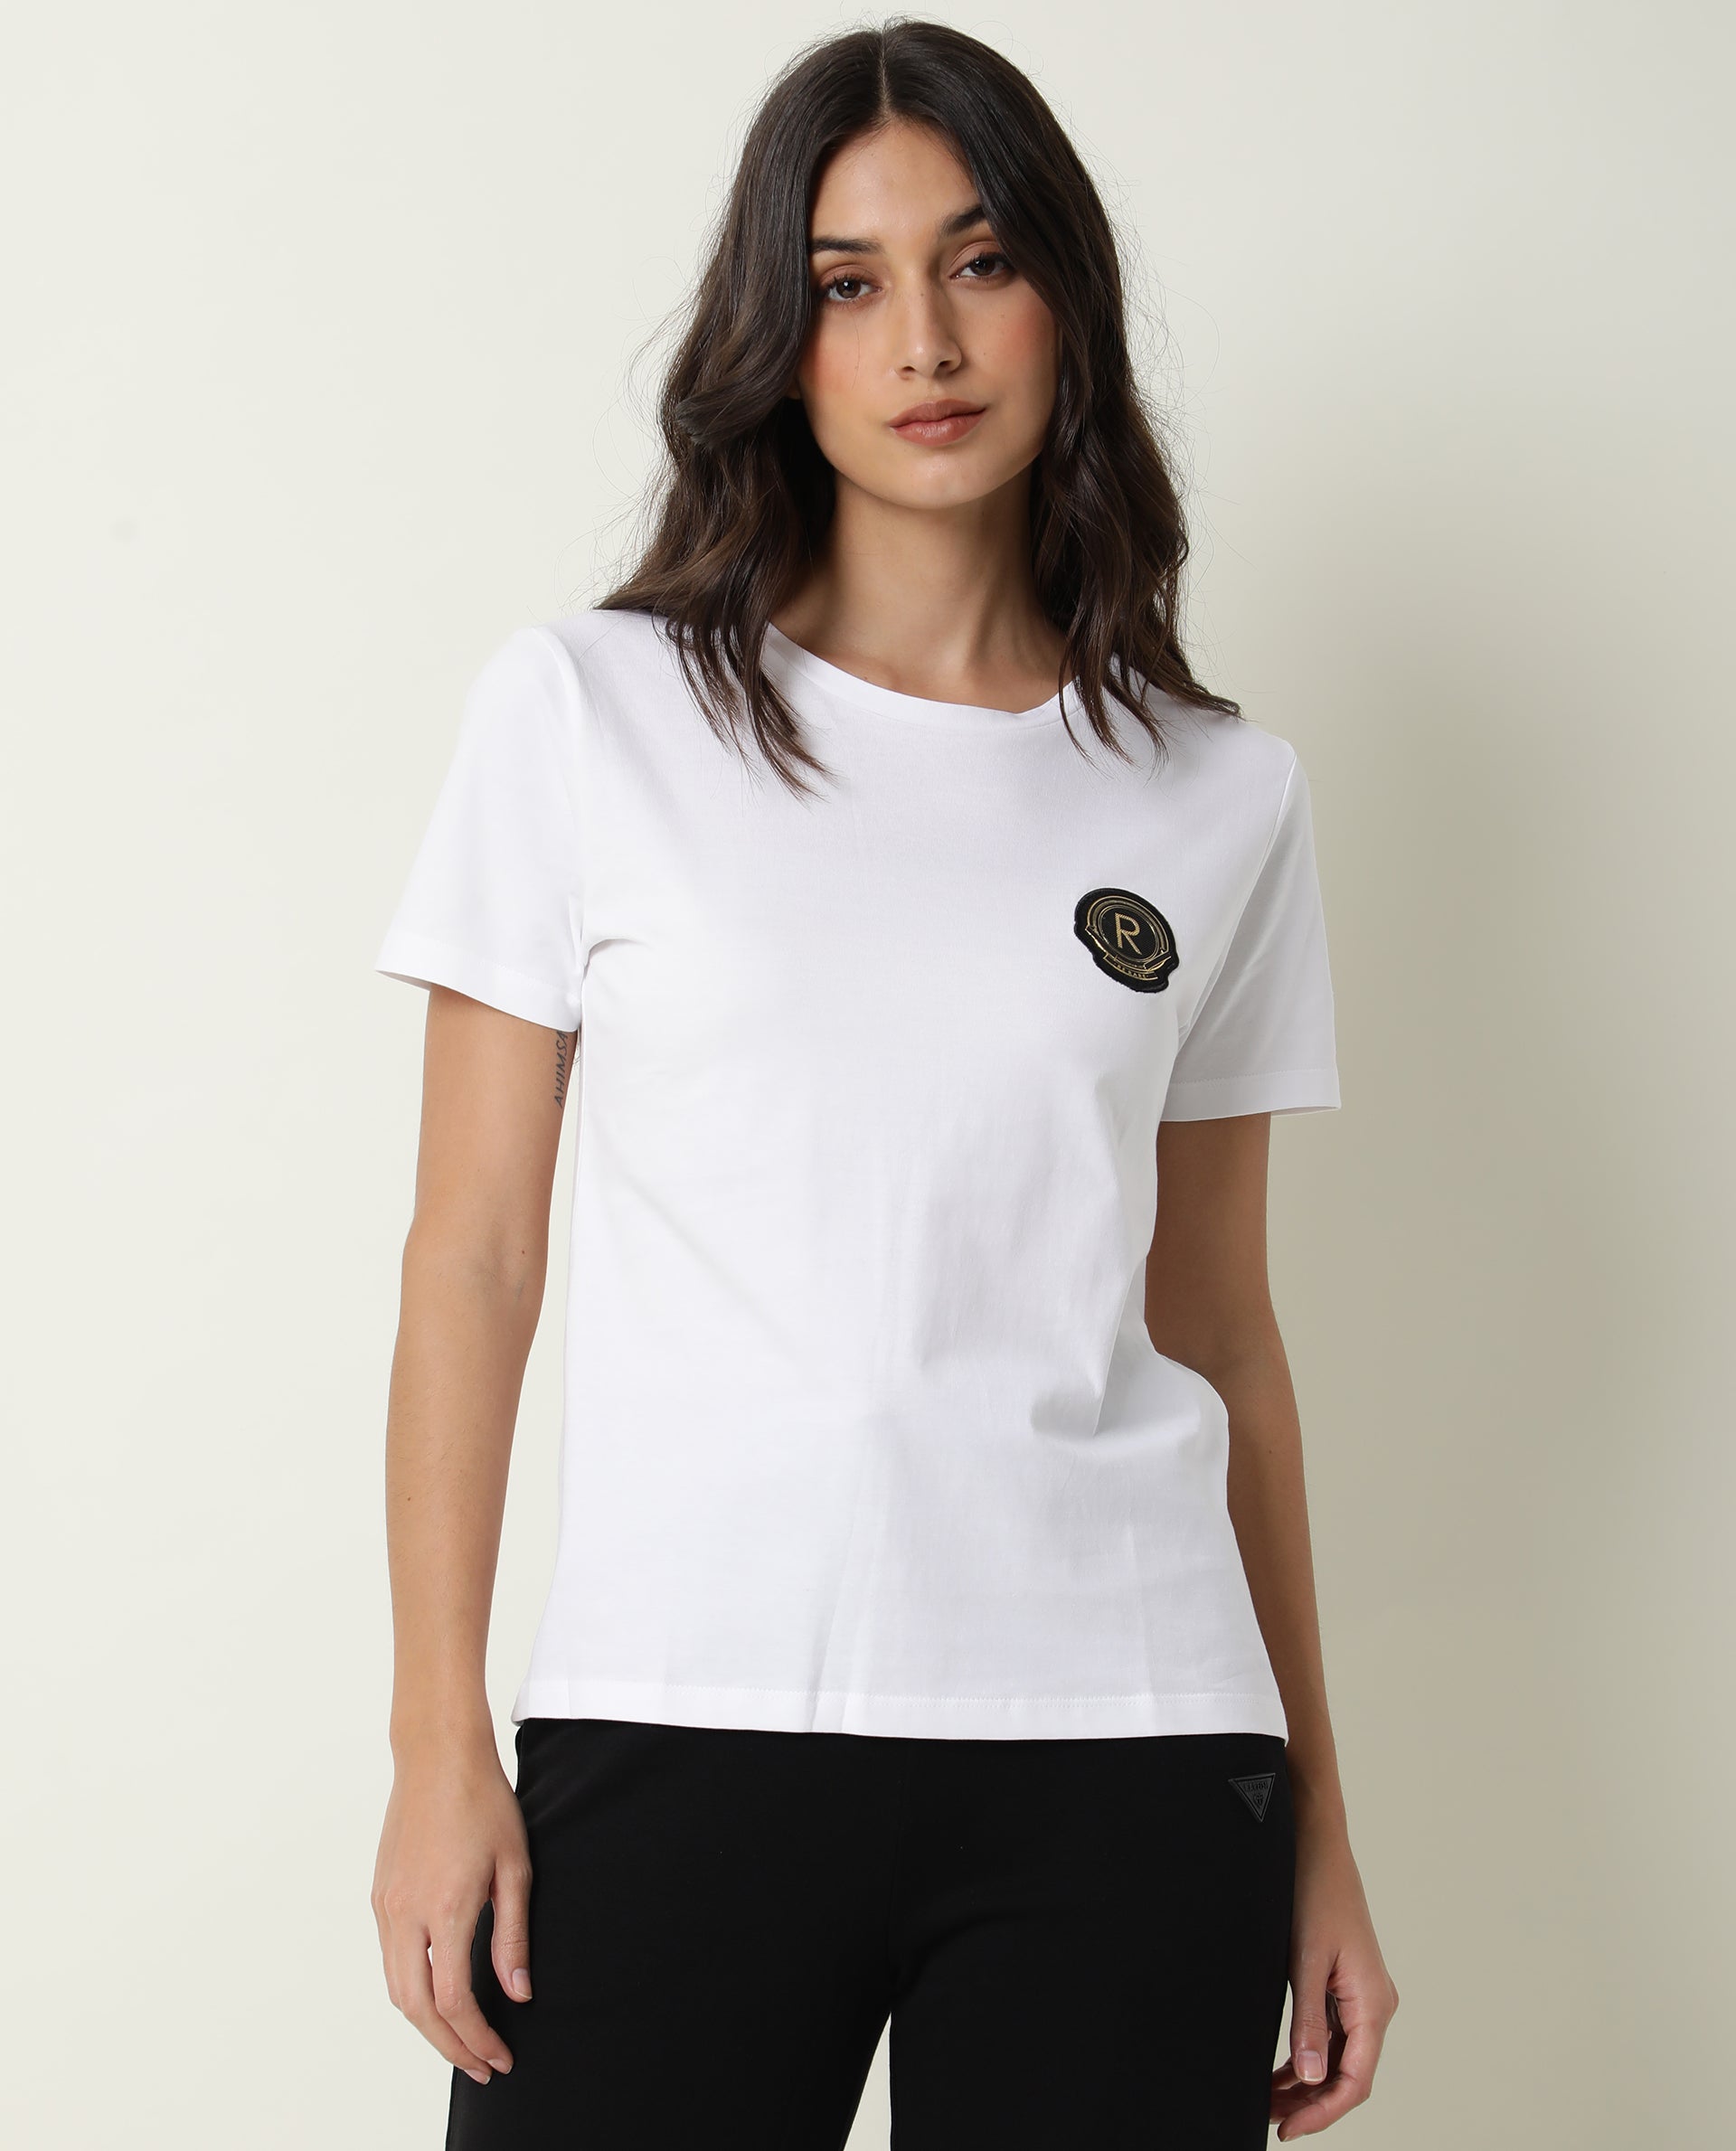 Buy Off White T-Shirt For Women 8907279306630 At Rareism